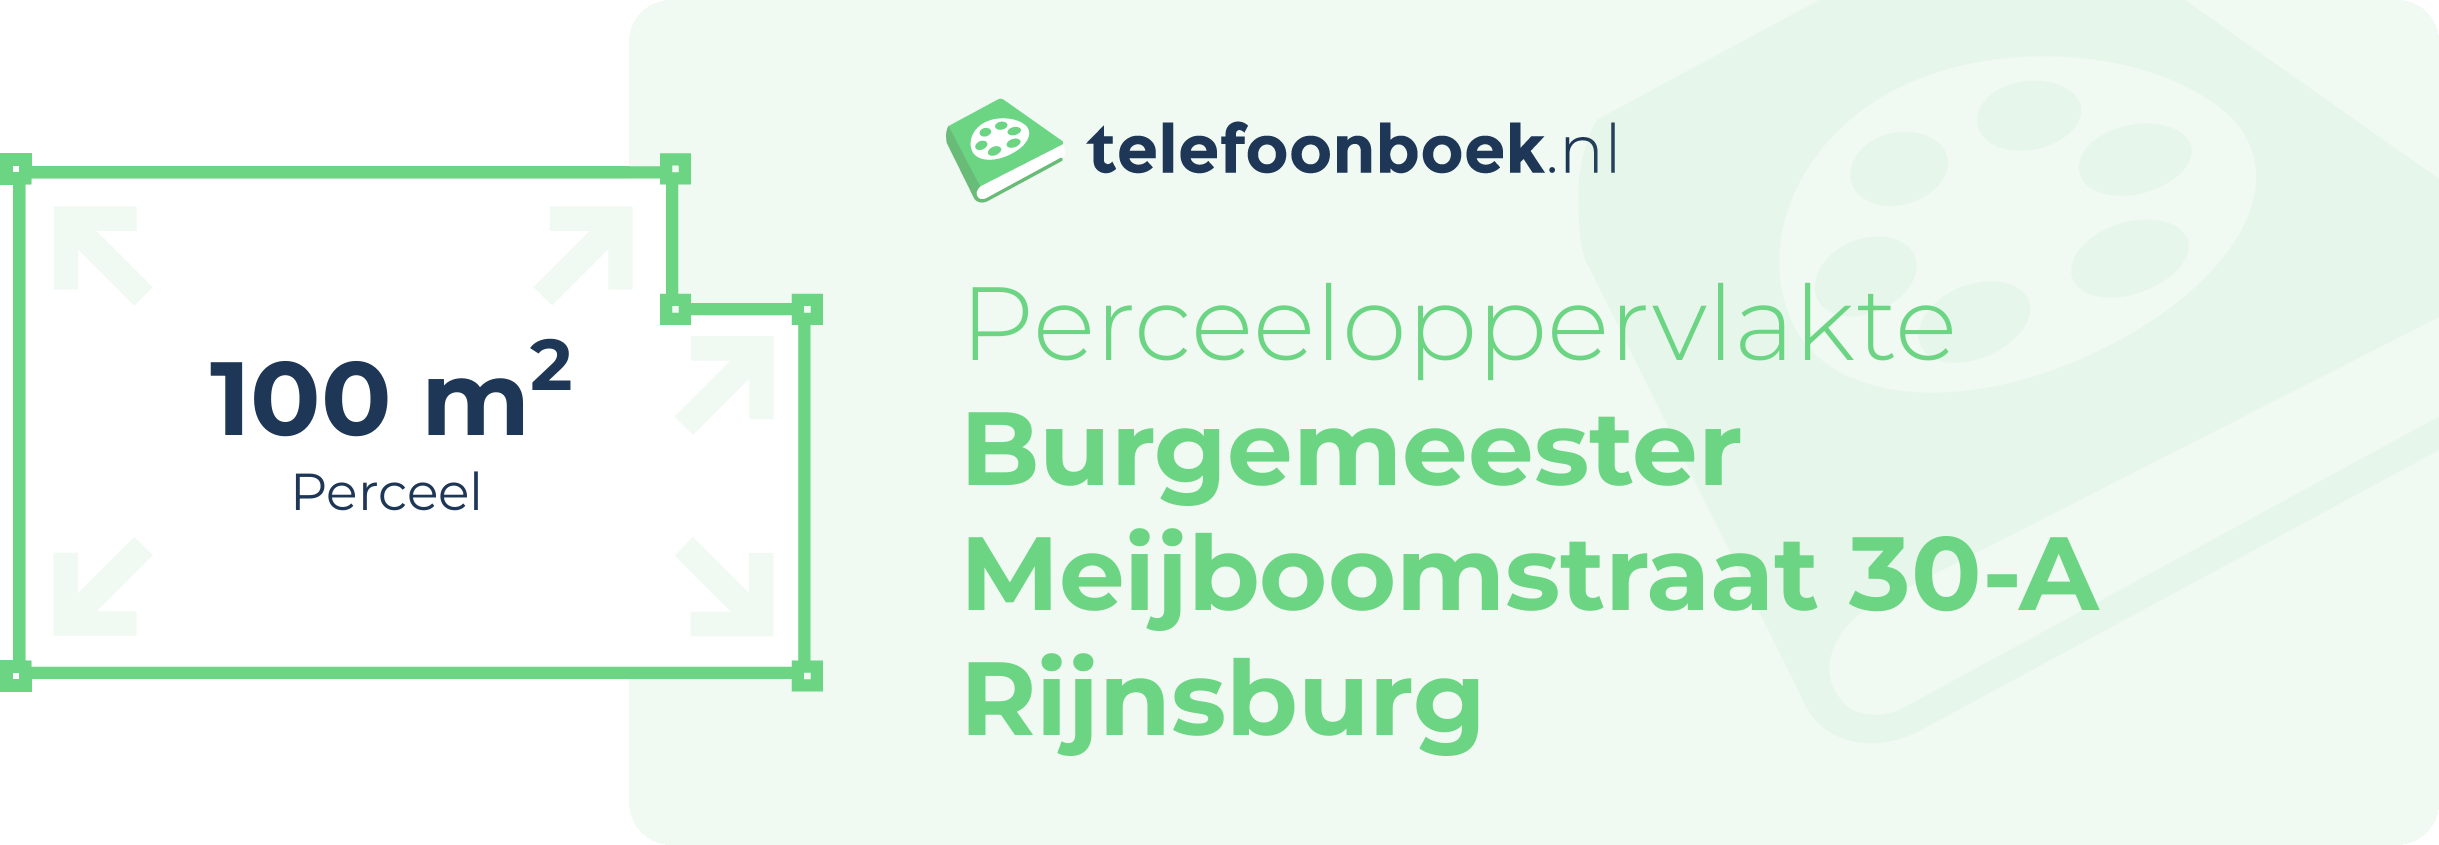 Perceeloppervlakte Burgemeester Meijboomstraat 30-A Rijnsburg